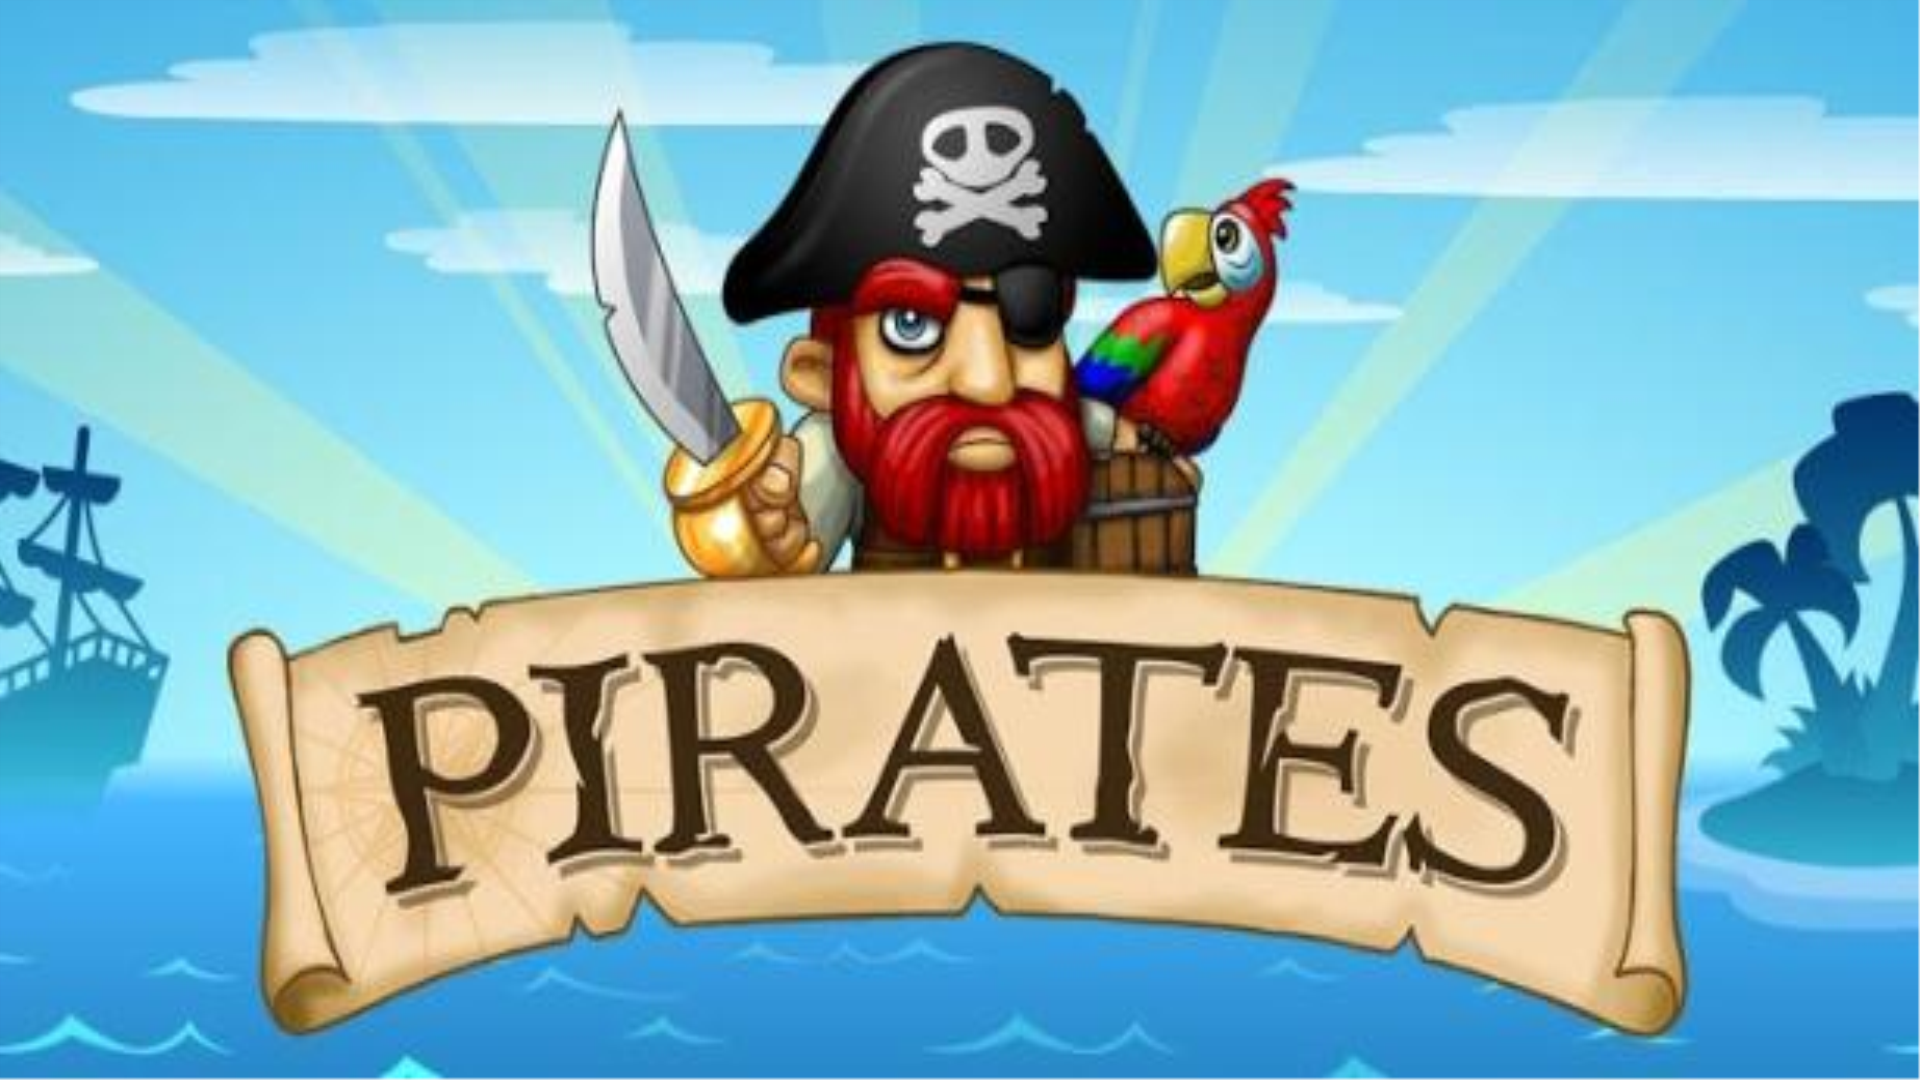 Pirates Pirates игра. Пираты на андроид. Пираты игра мобильная. Игра про пиратов на Android. Игра пират против пиратов